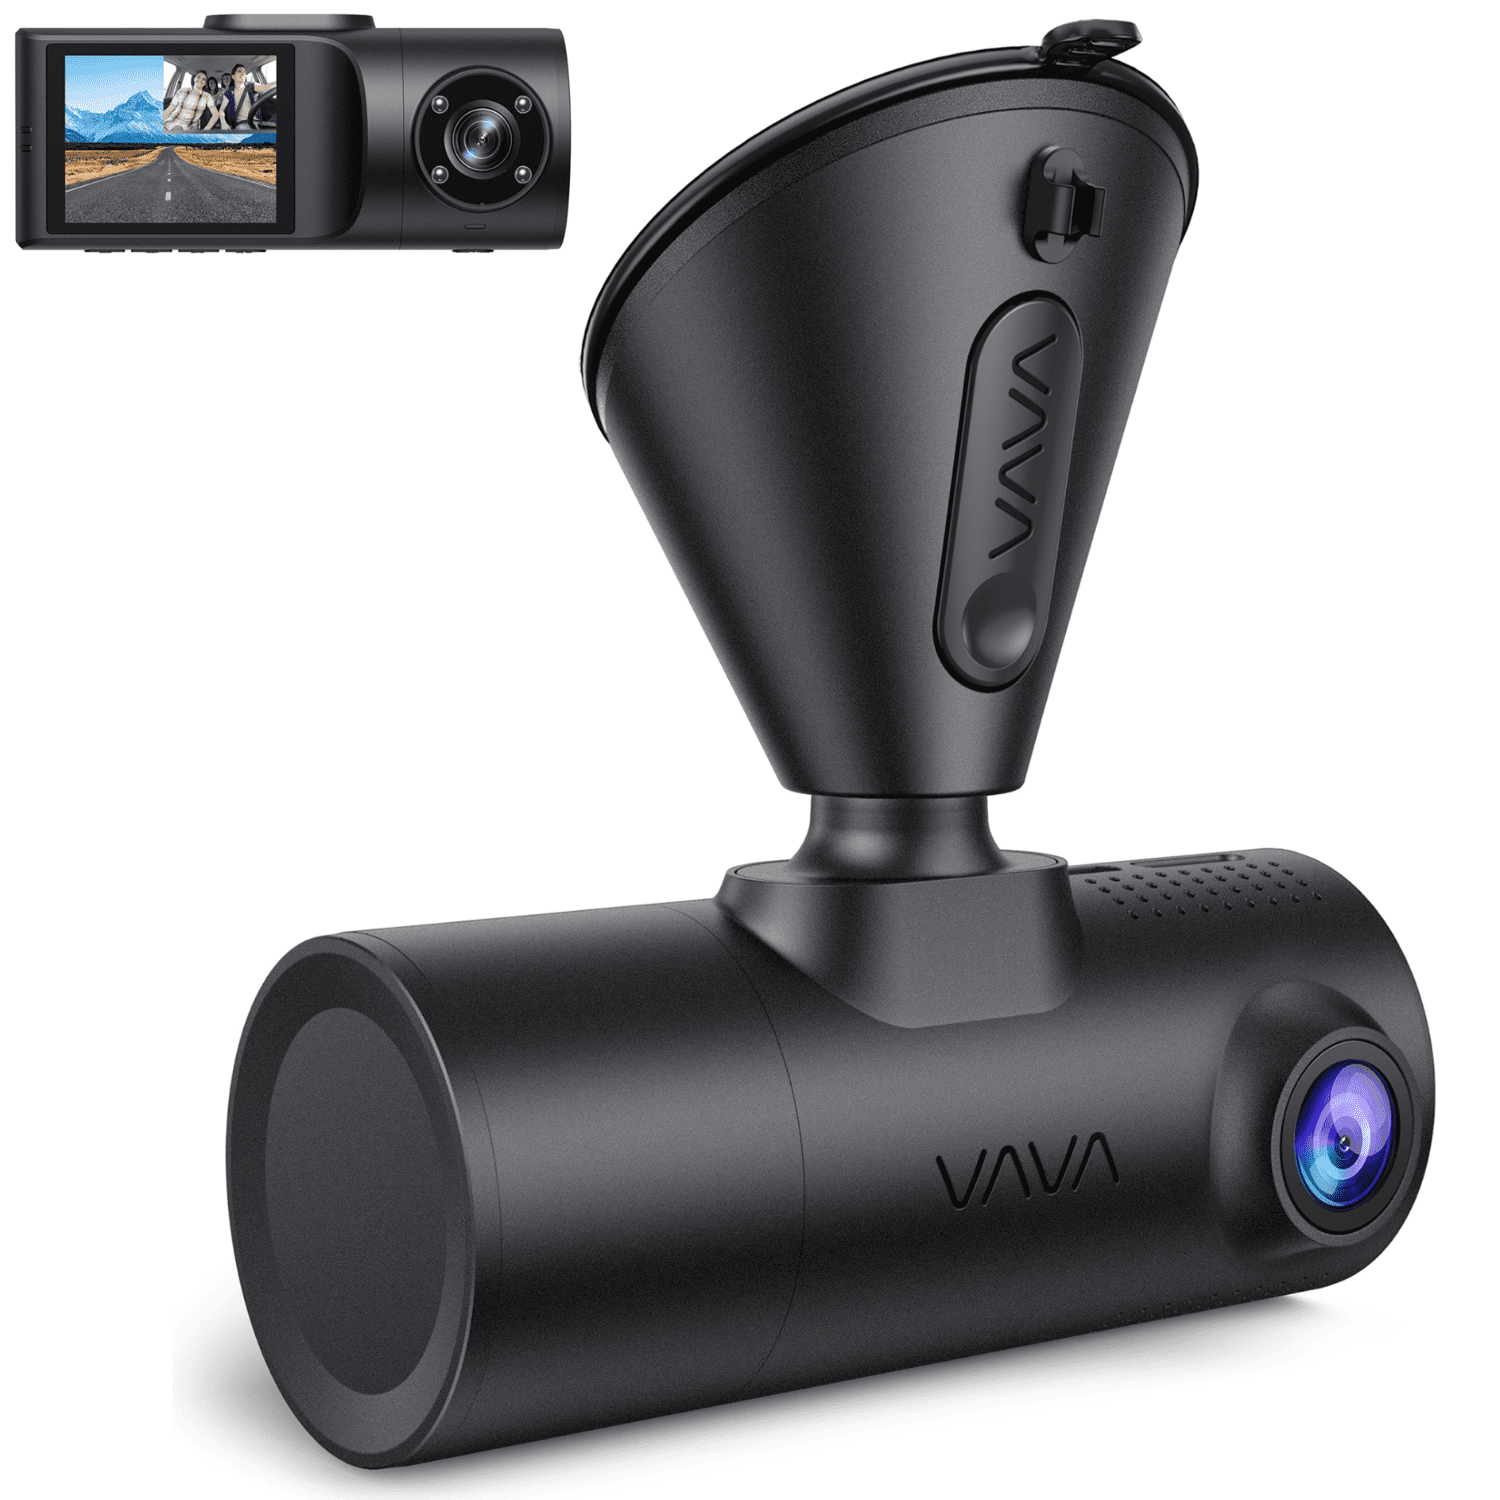 3840X2140@30Fps Wi-Fi Car Dash Camera with Sony Night Vision Sensor VAV 4K Dash Cam Loop Recording G-Sensor Dashboard Camera Recorder with Parking Mode 